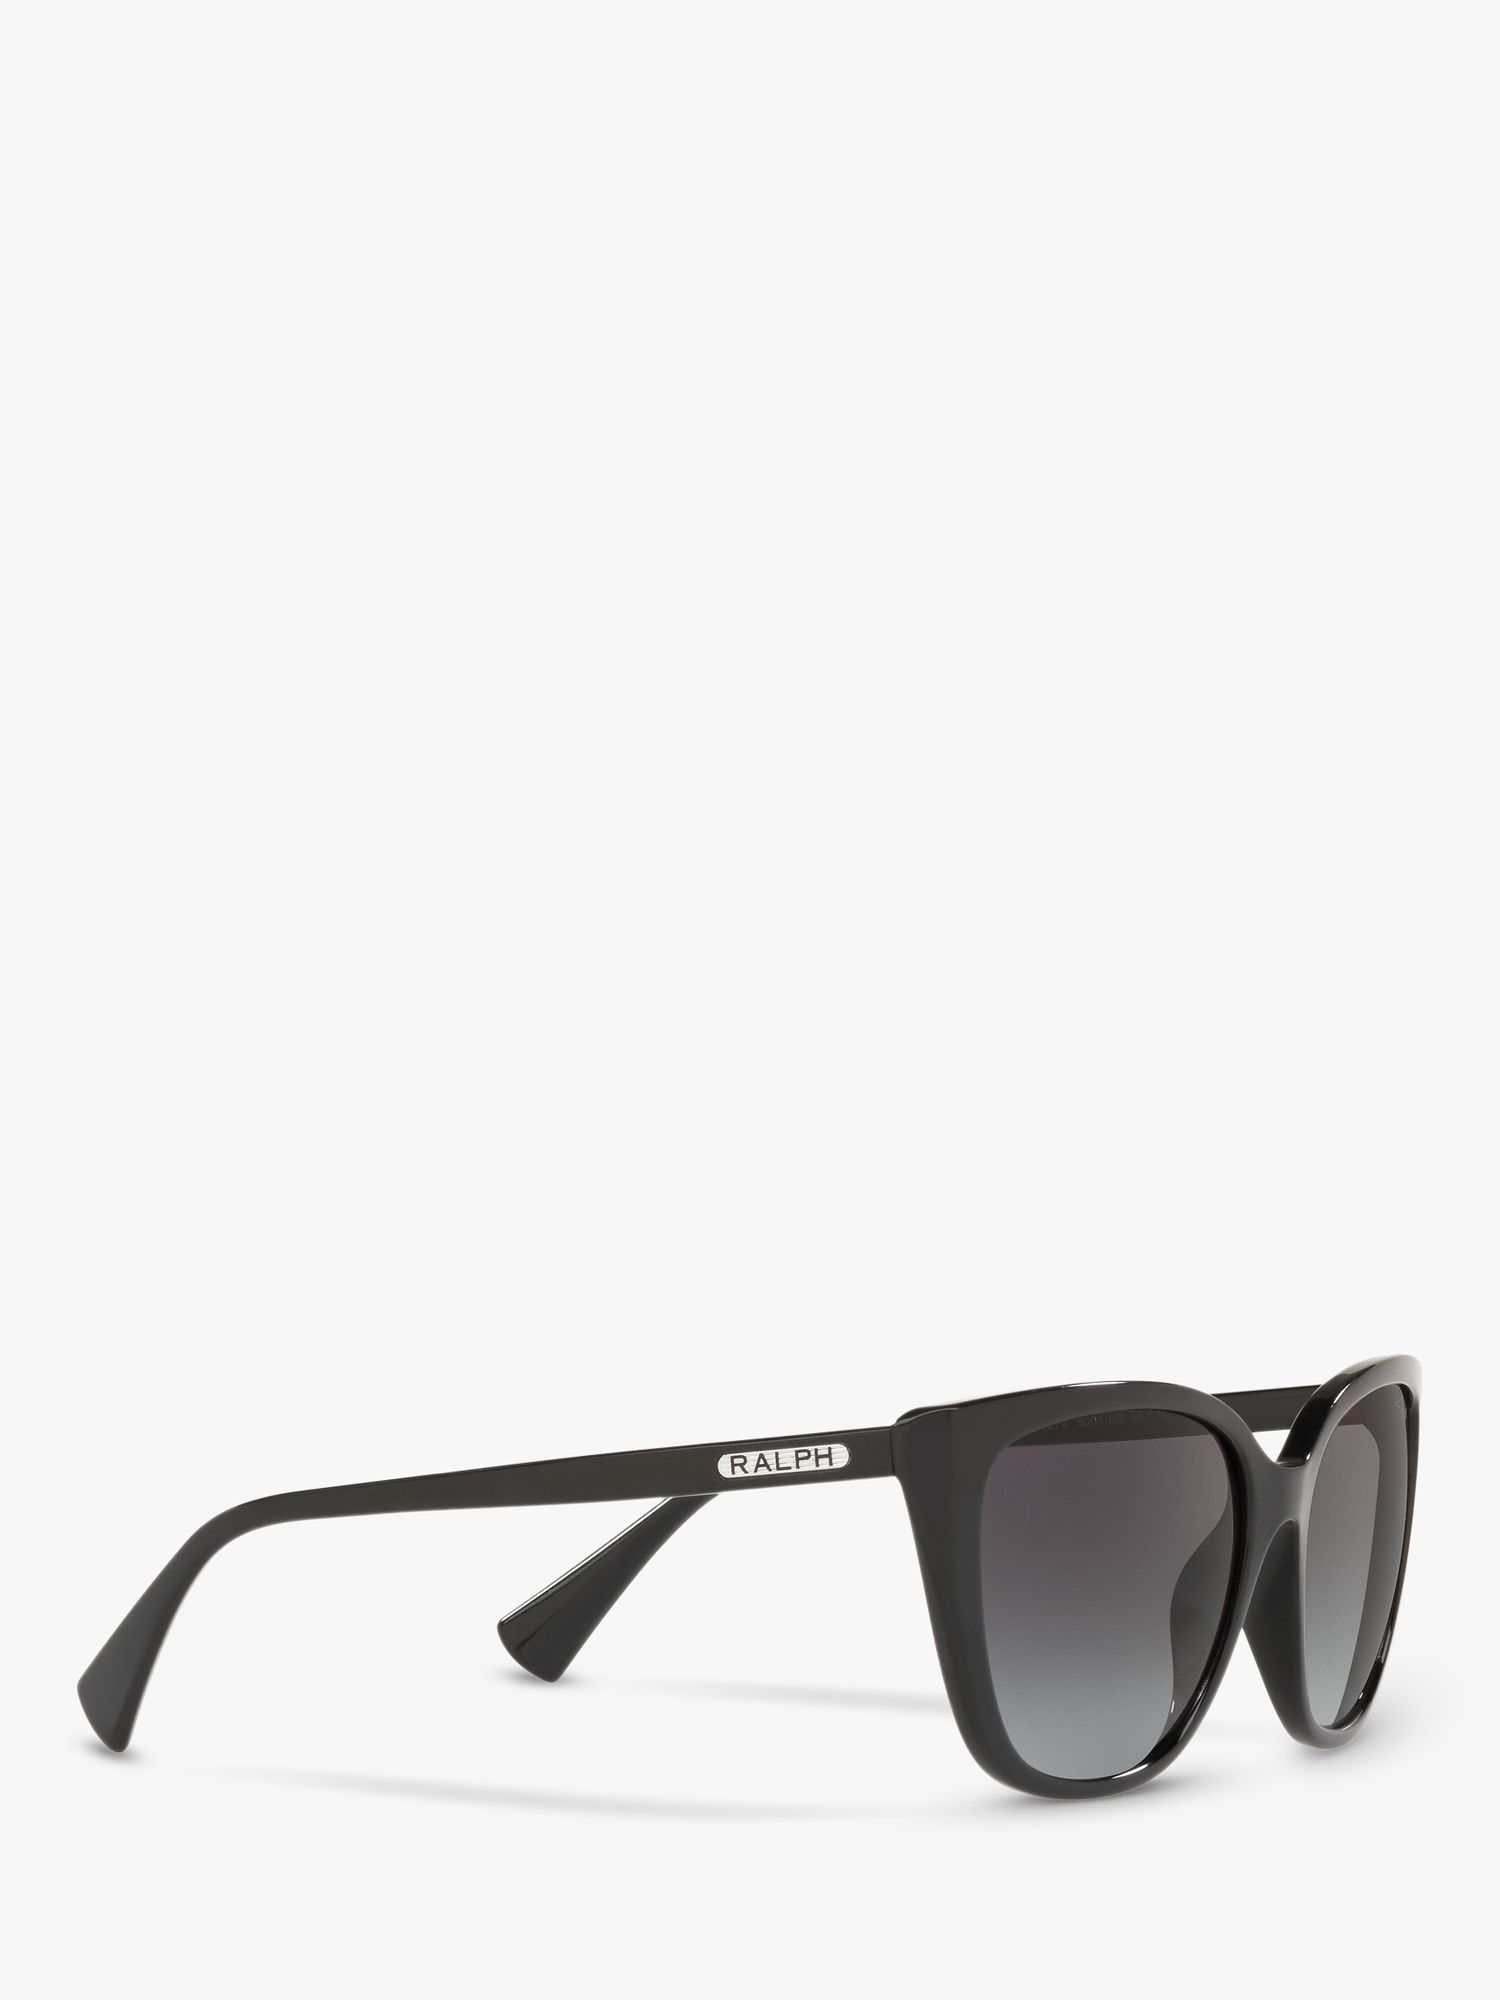 Ralph RA5274 Women's Butterfly Shape Sunglasses, Black Gloss/Grey Gradient